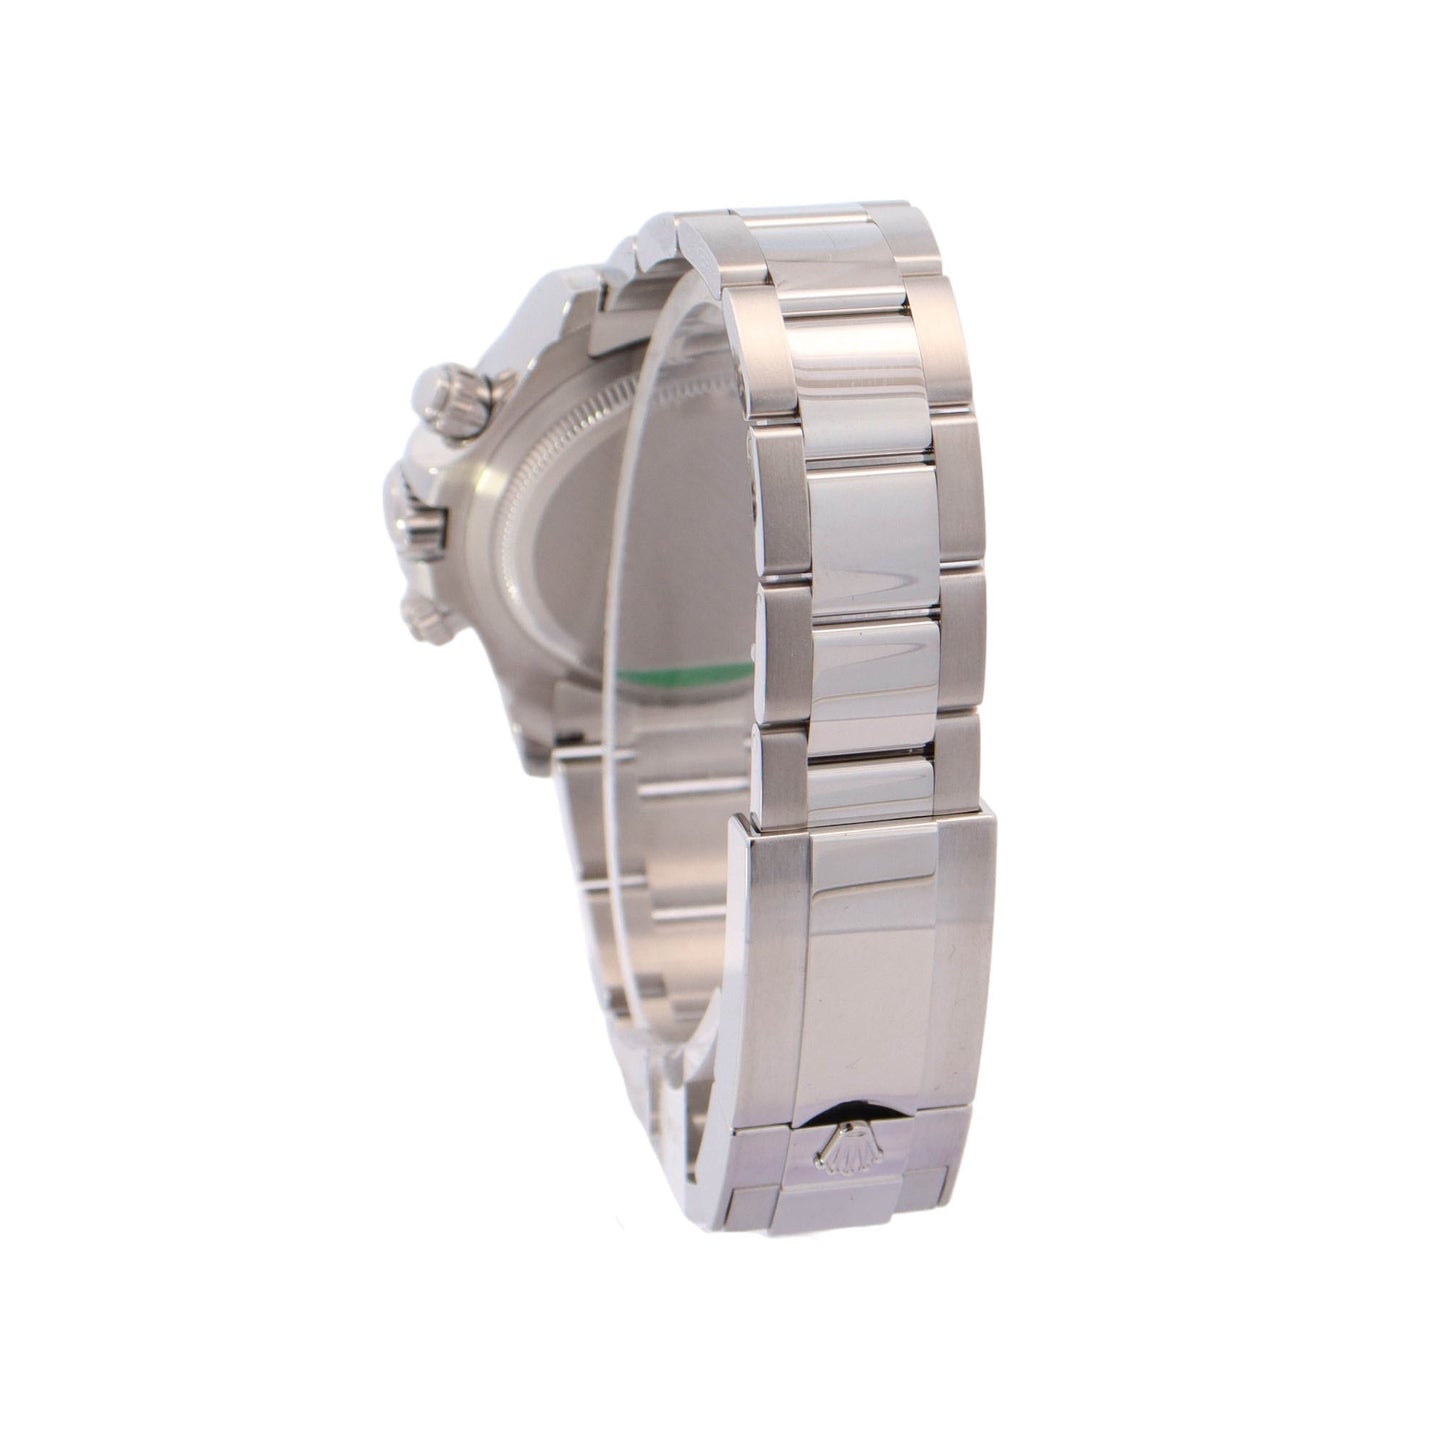 Rolex Daytona Stainless Steel 40mm Black Chronograph Dial Watch Reference #: 126500LN - Happy Jewelers Fine Jewelry Lifetime Warranty